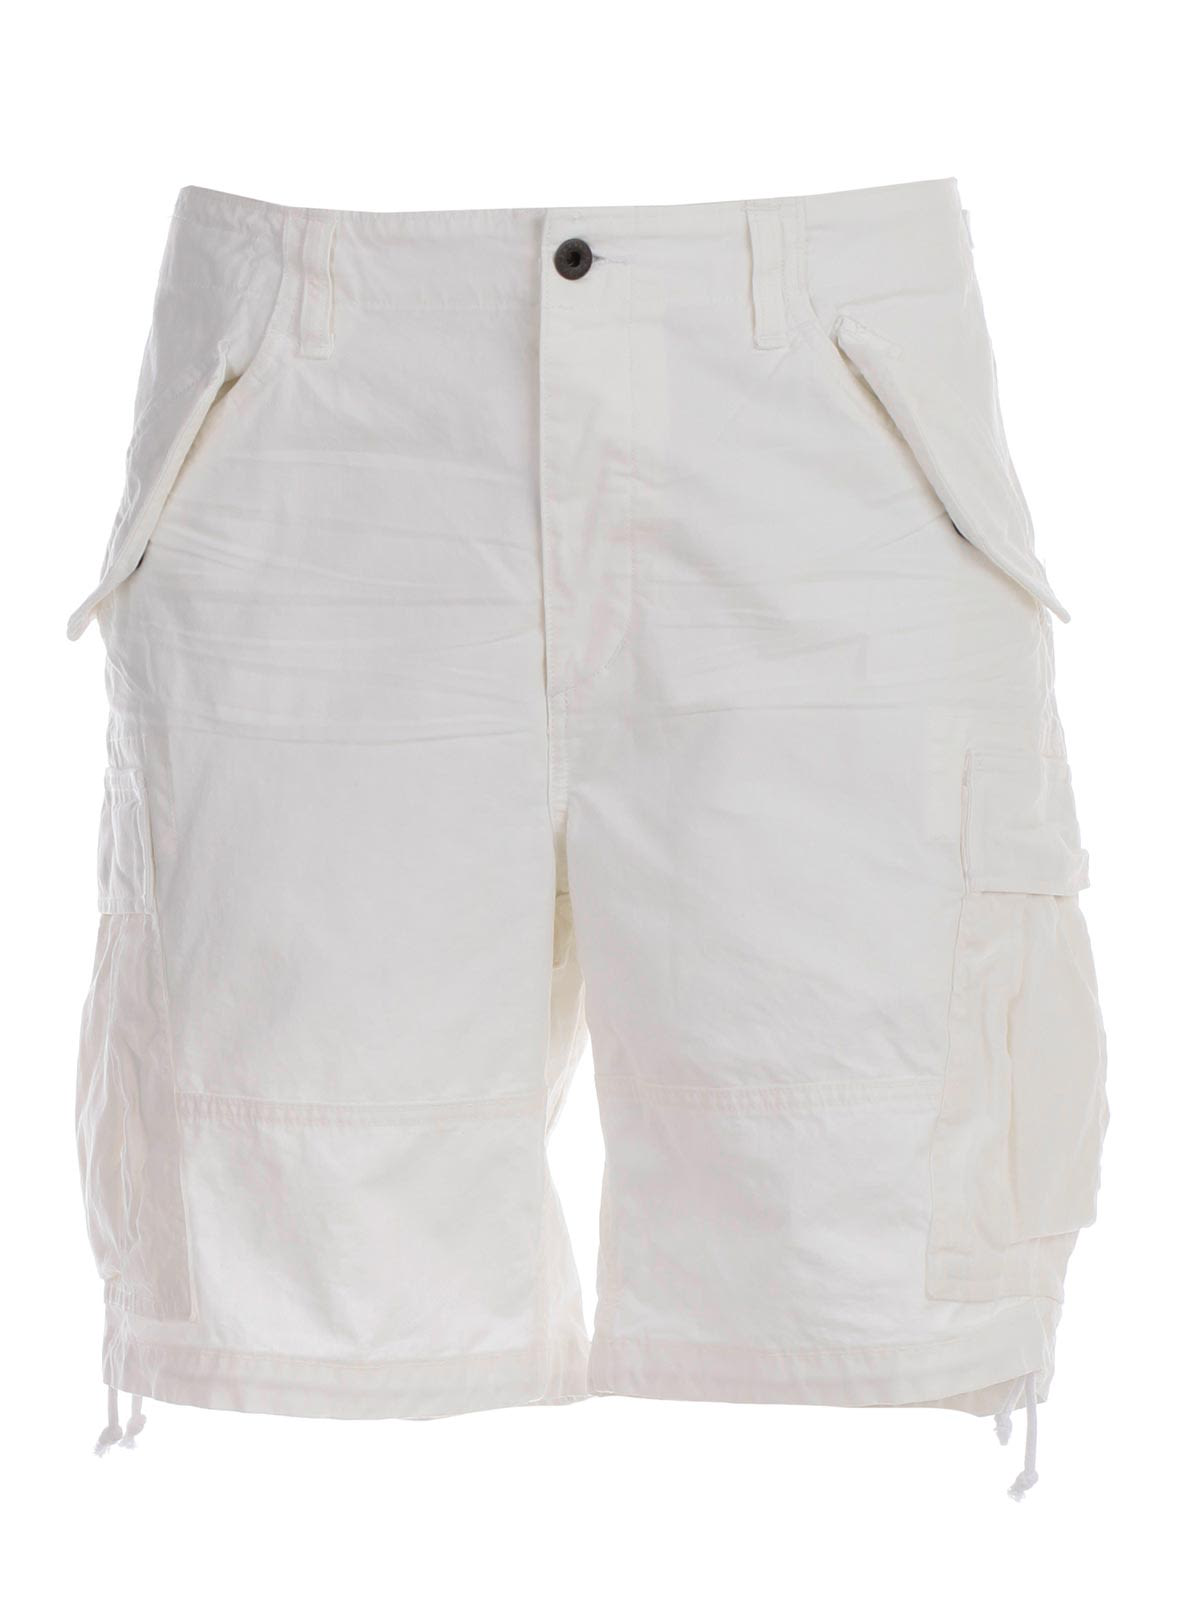 white polo cargo shorts